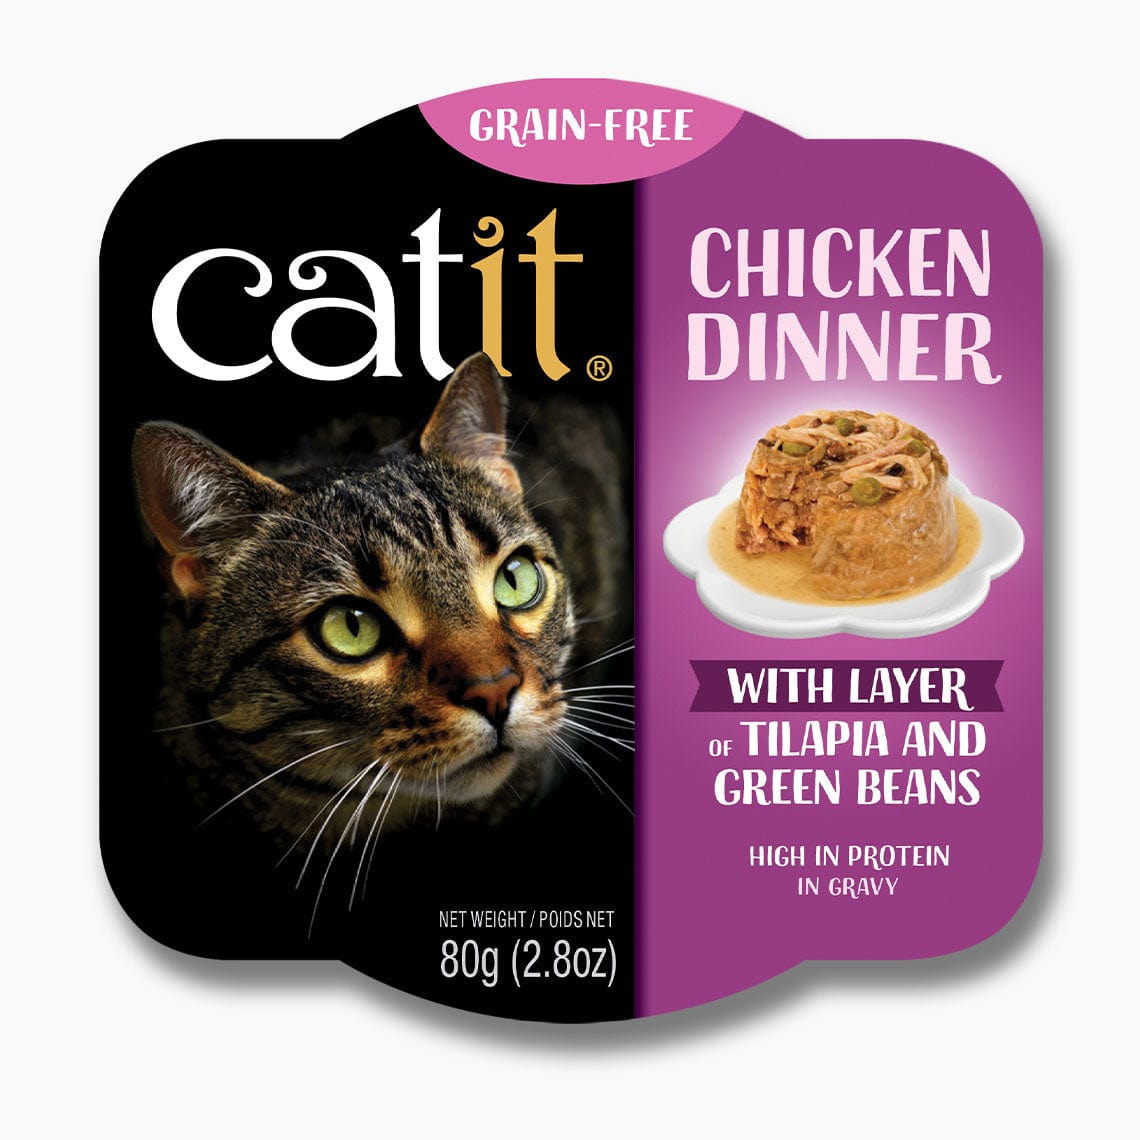 Catit Chicken Dinner